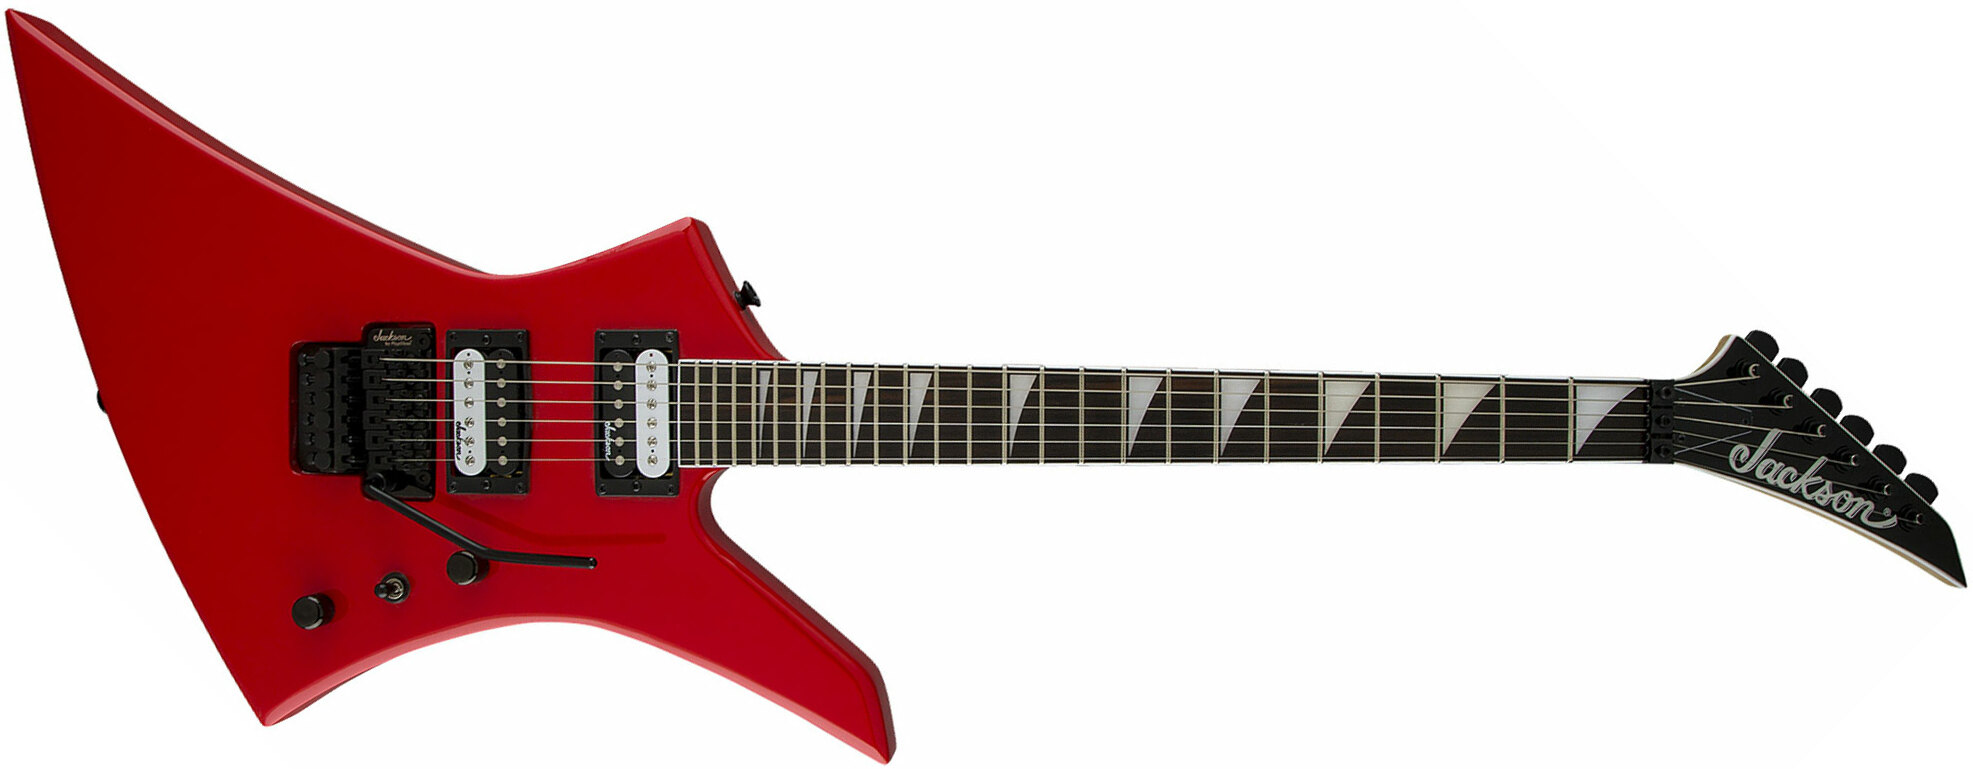 Jackson Kelly Js32 2h Fr Ama - Ferrari Red - Metal electric guitar - Main picture